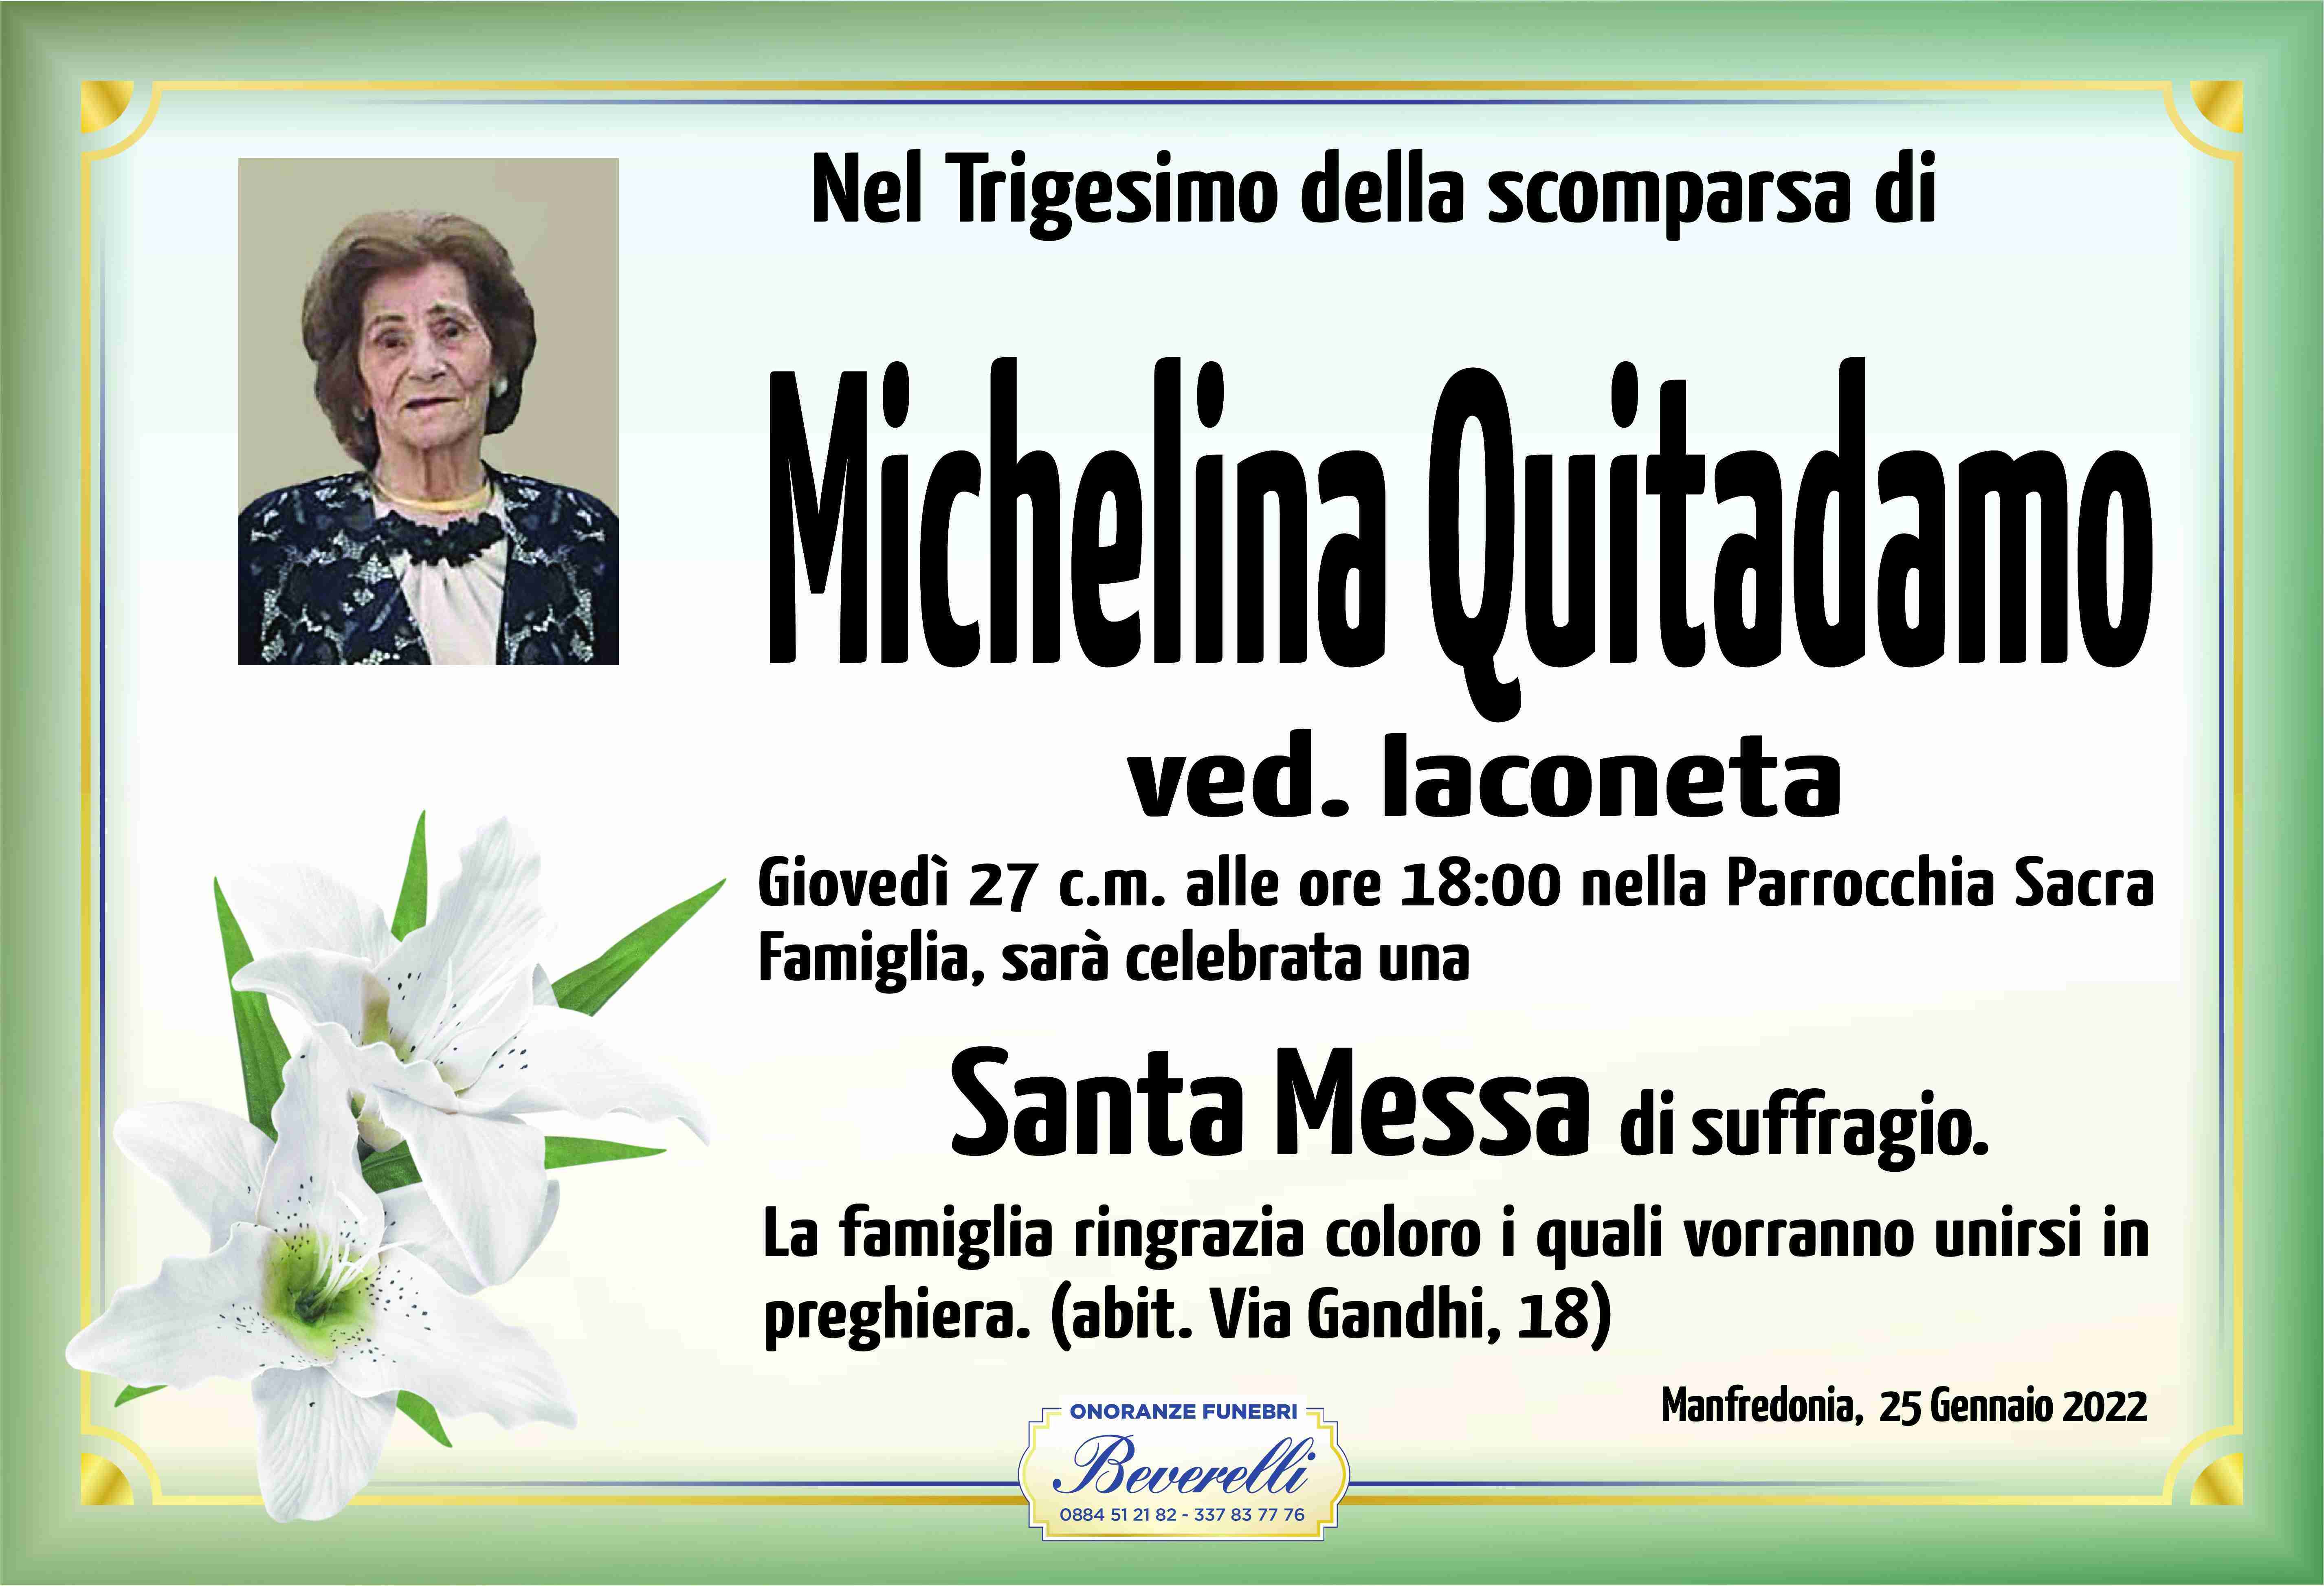 Michelina Quitadamo